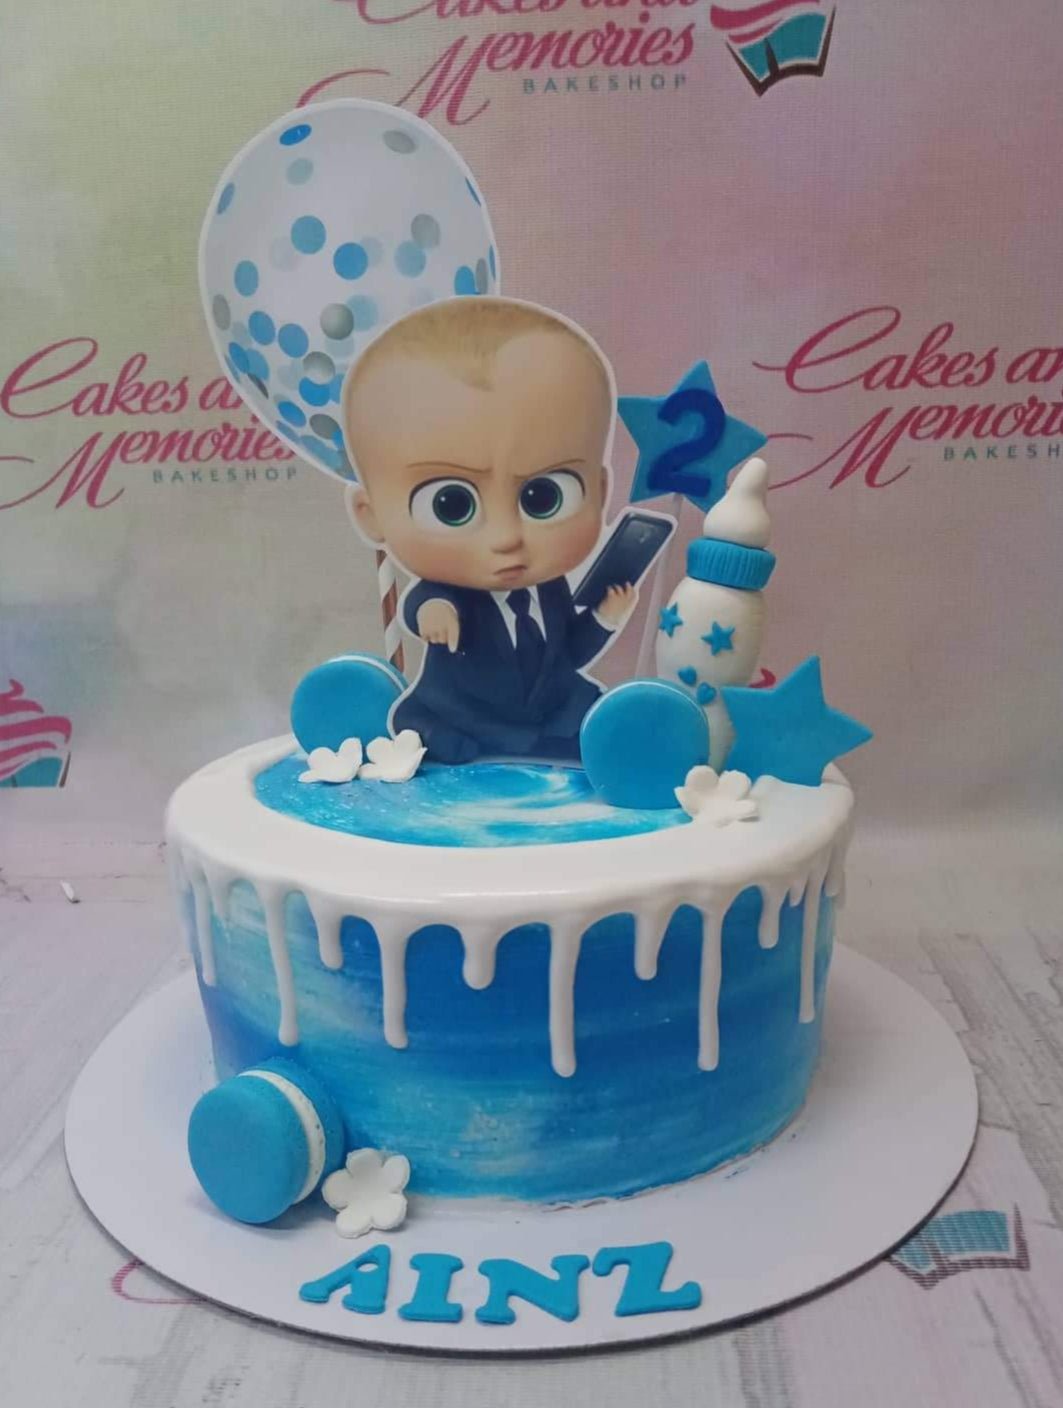 Baby Boss Inspired Cake